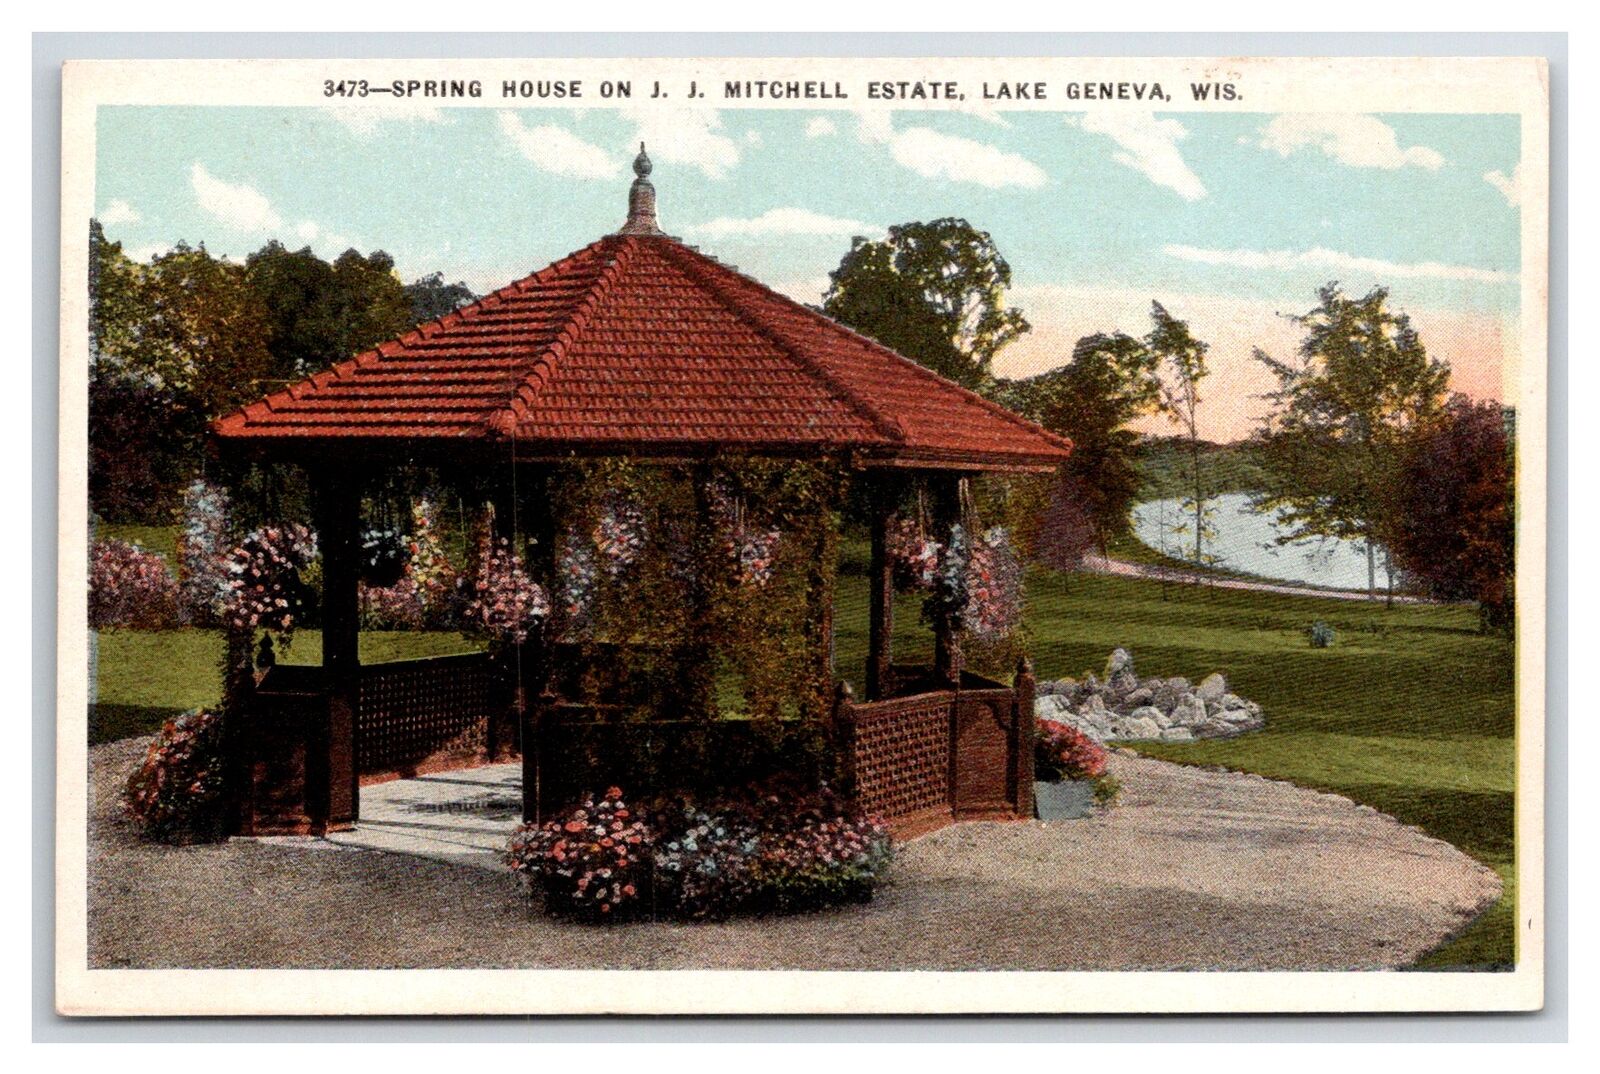 Lake Geneva, WI - Spring House on J. J. Mitchell Estate - Vintage Postcard